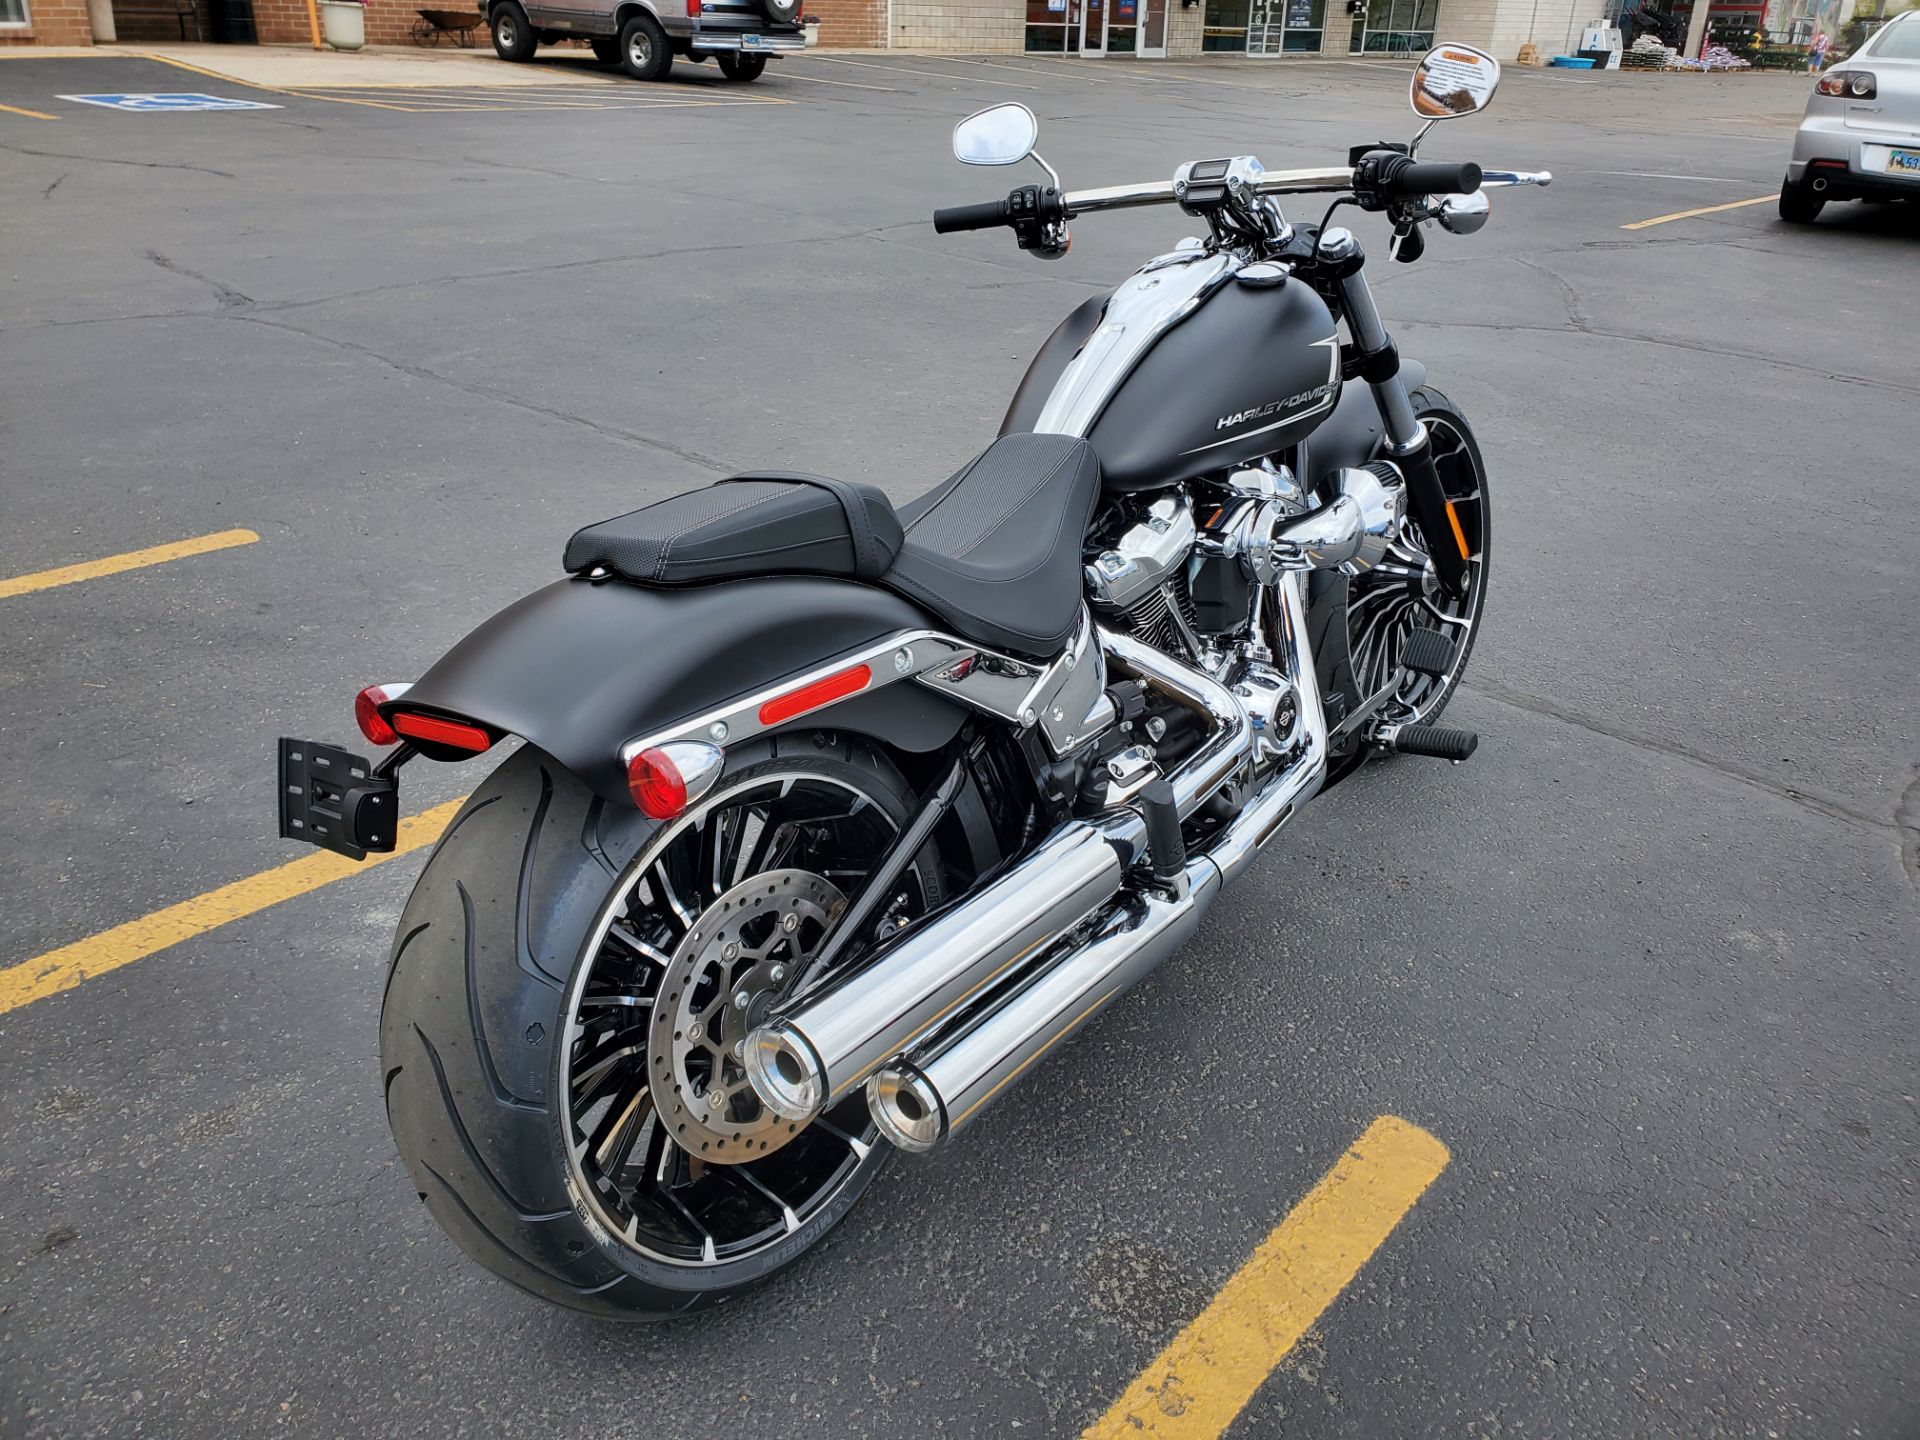 2023 Harley-Davidson Breakout® in Green River, Wyoming - Photo 2